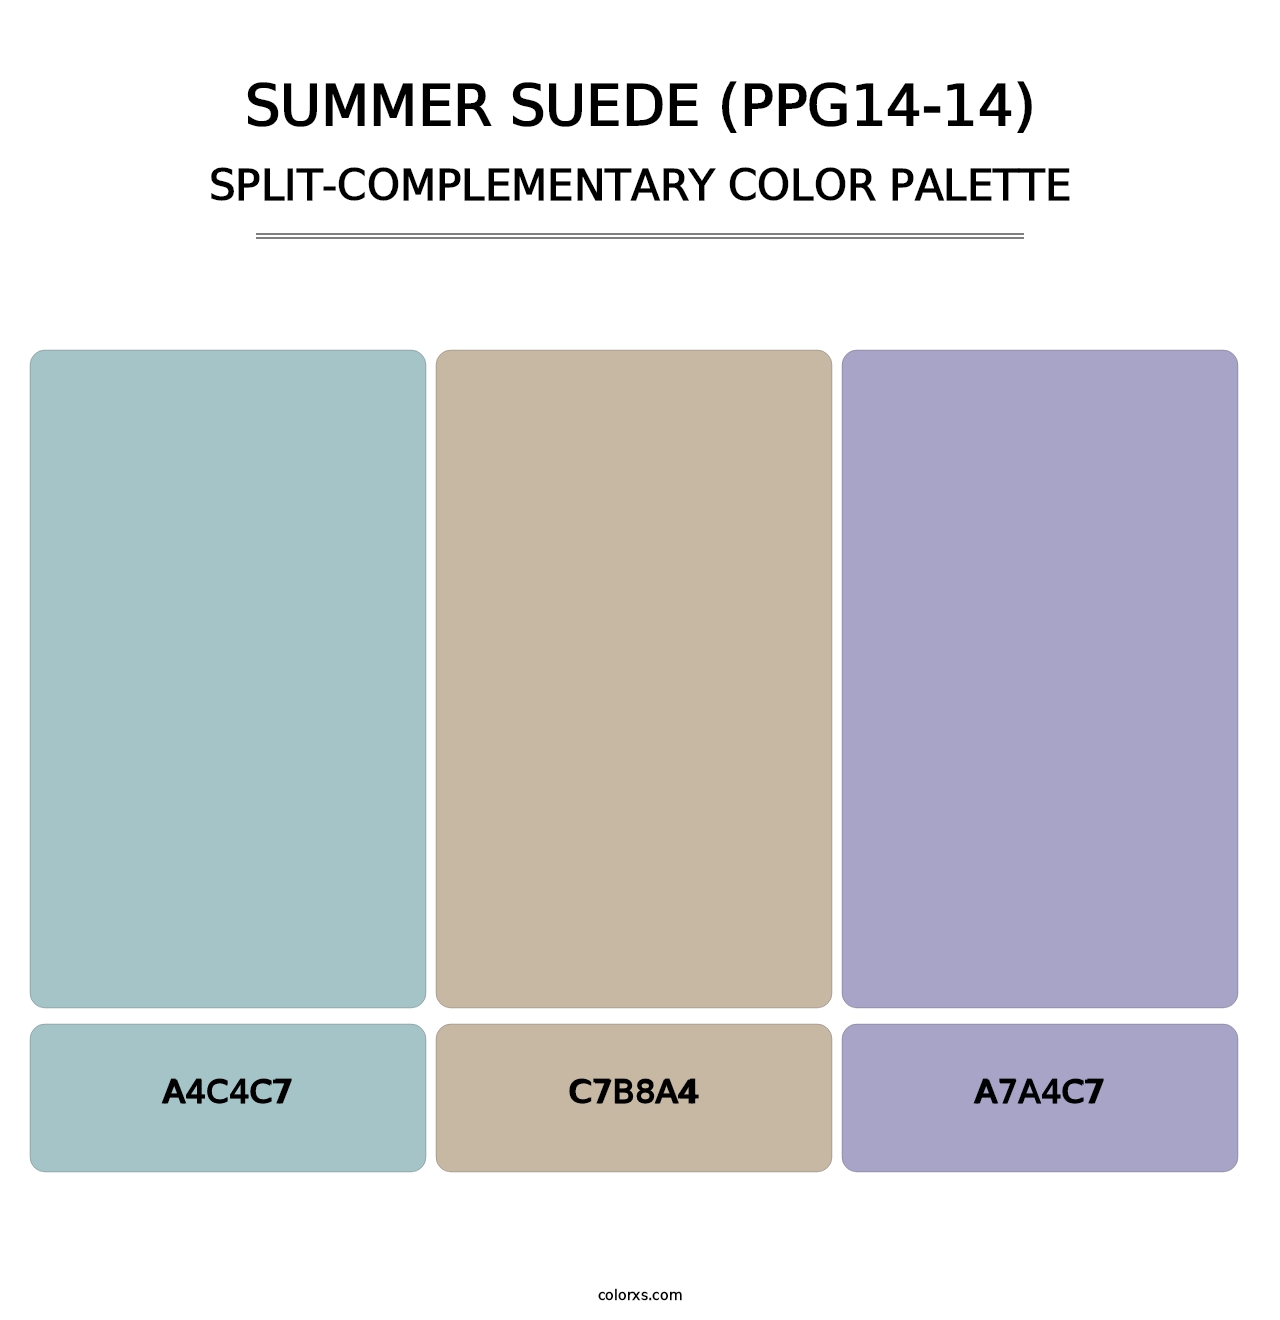 Summer Suede (PPG14-14) - Split-Complementary Color Palette